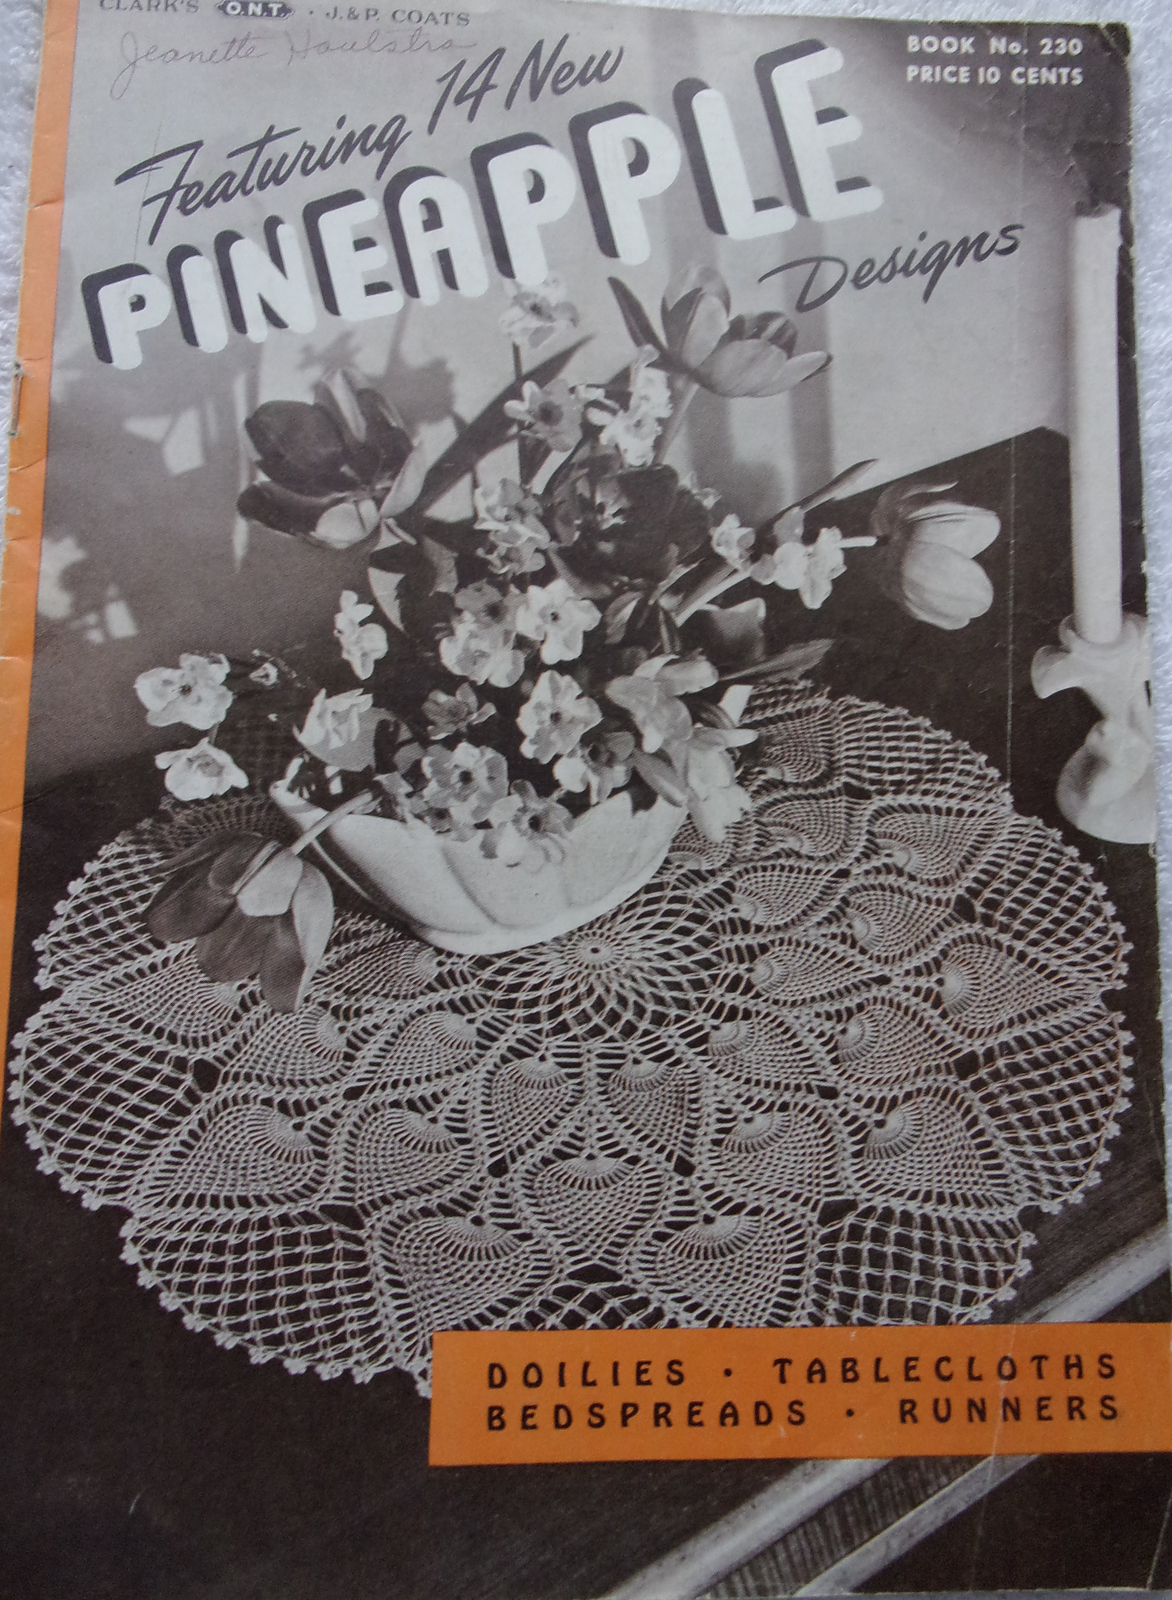 Clark’s J&P Coats Book No 230 Featuring 14 New Pineapple Designs 1946 - $4.99